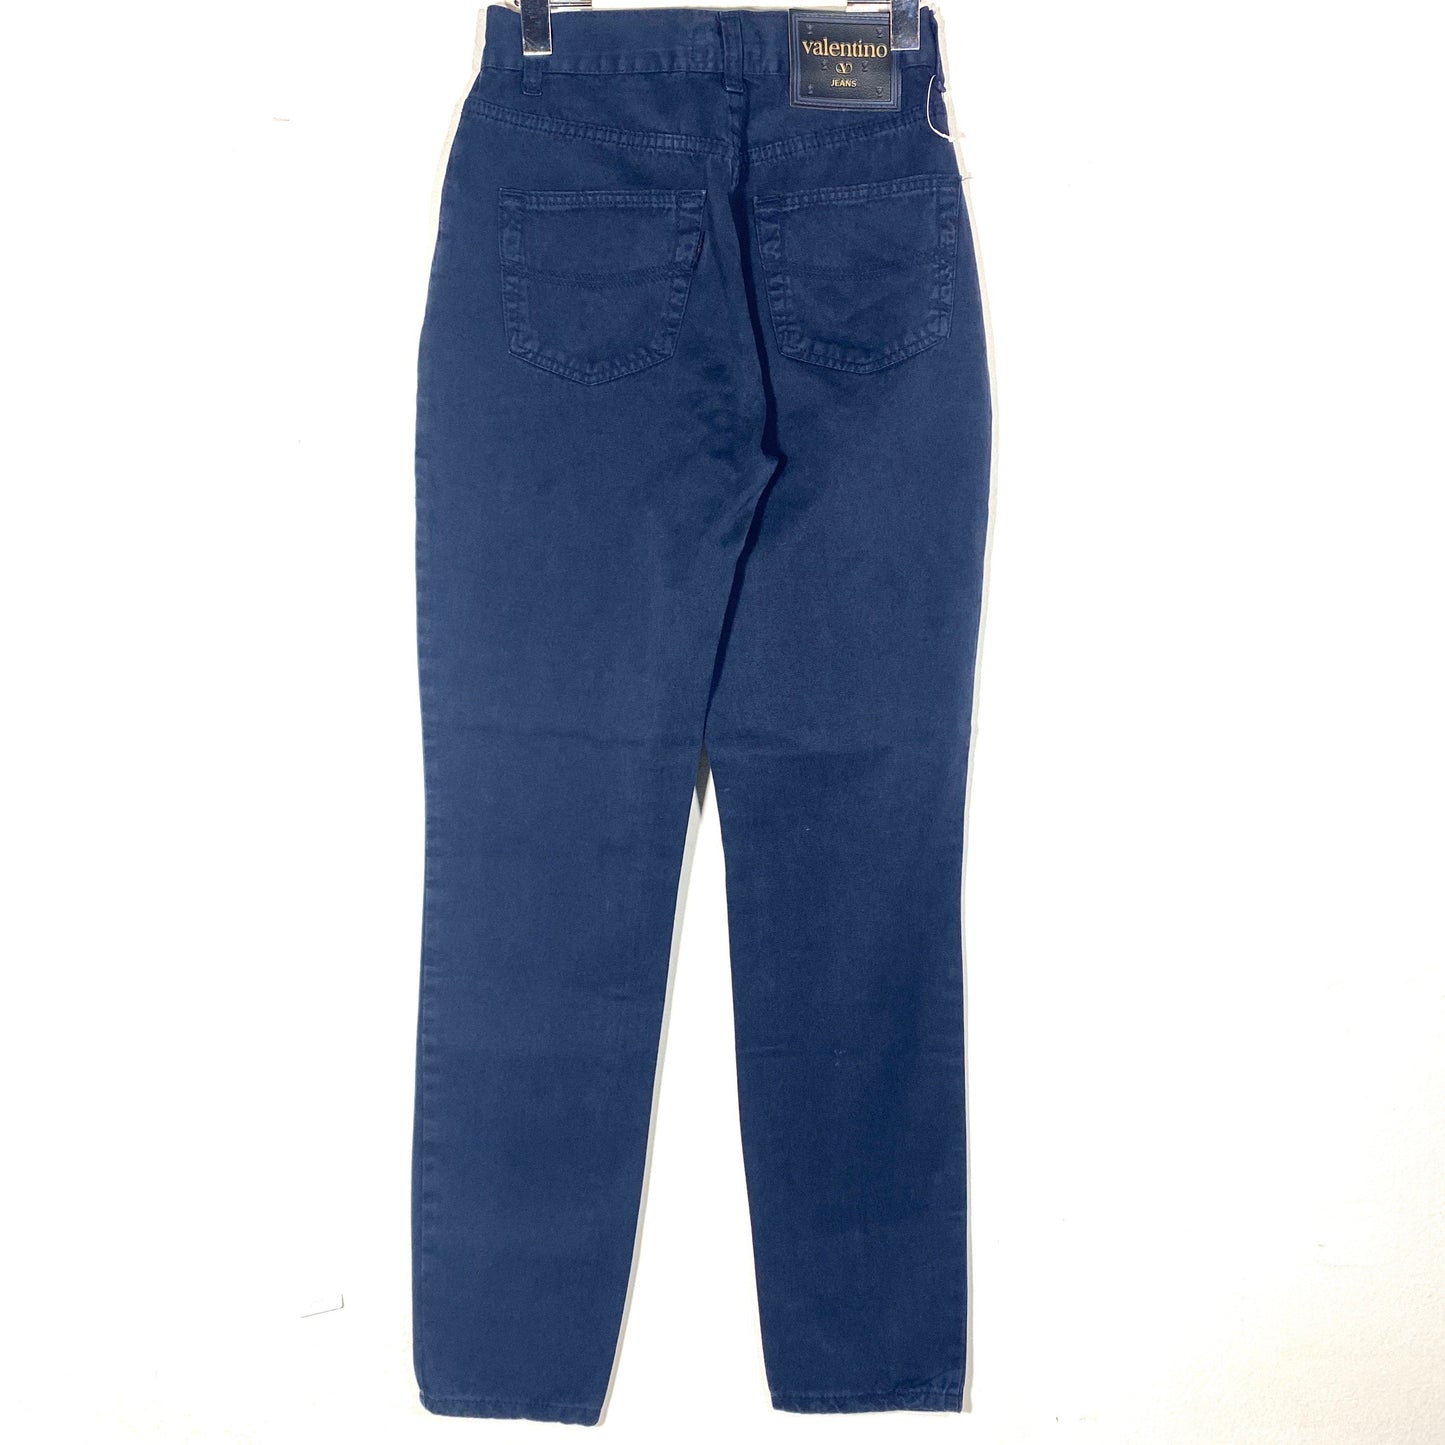 Valentino NOS 90s navy blue ladies denim trousers, high waist straight cut, size 28